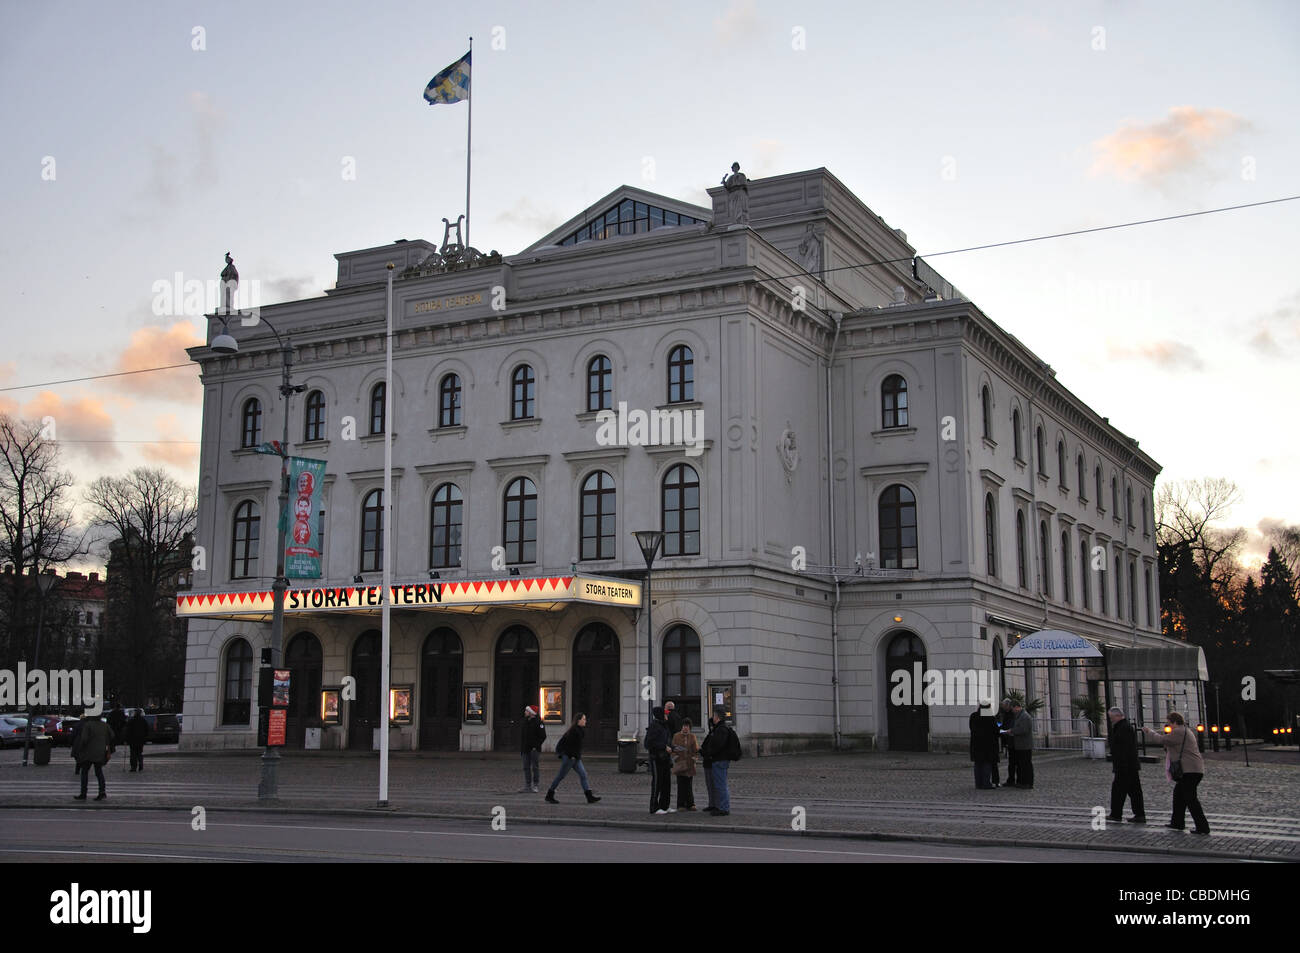 Stora Theatre, Kungsparken, Gothenburg, Västergötland & Bohuslän Province, Kingdom of Sweden Stock Photo